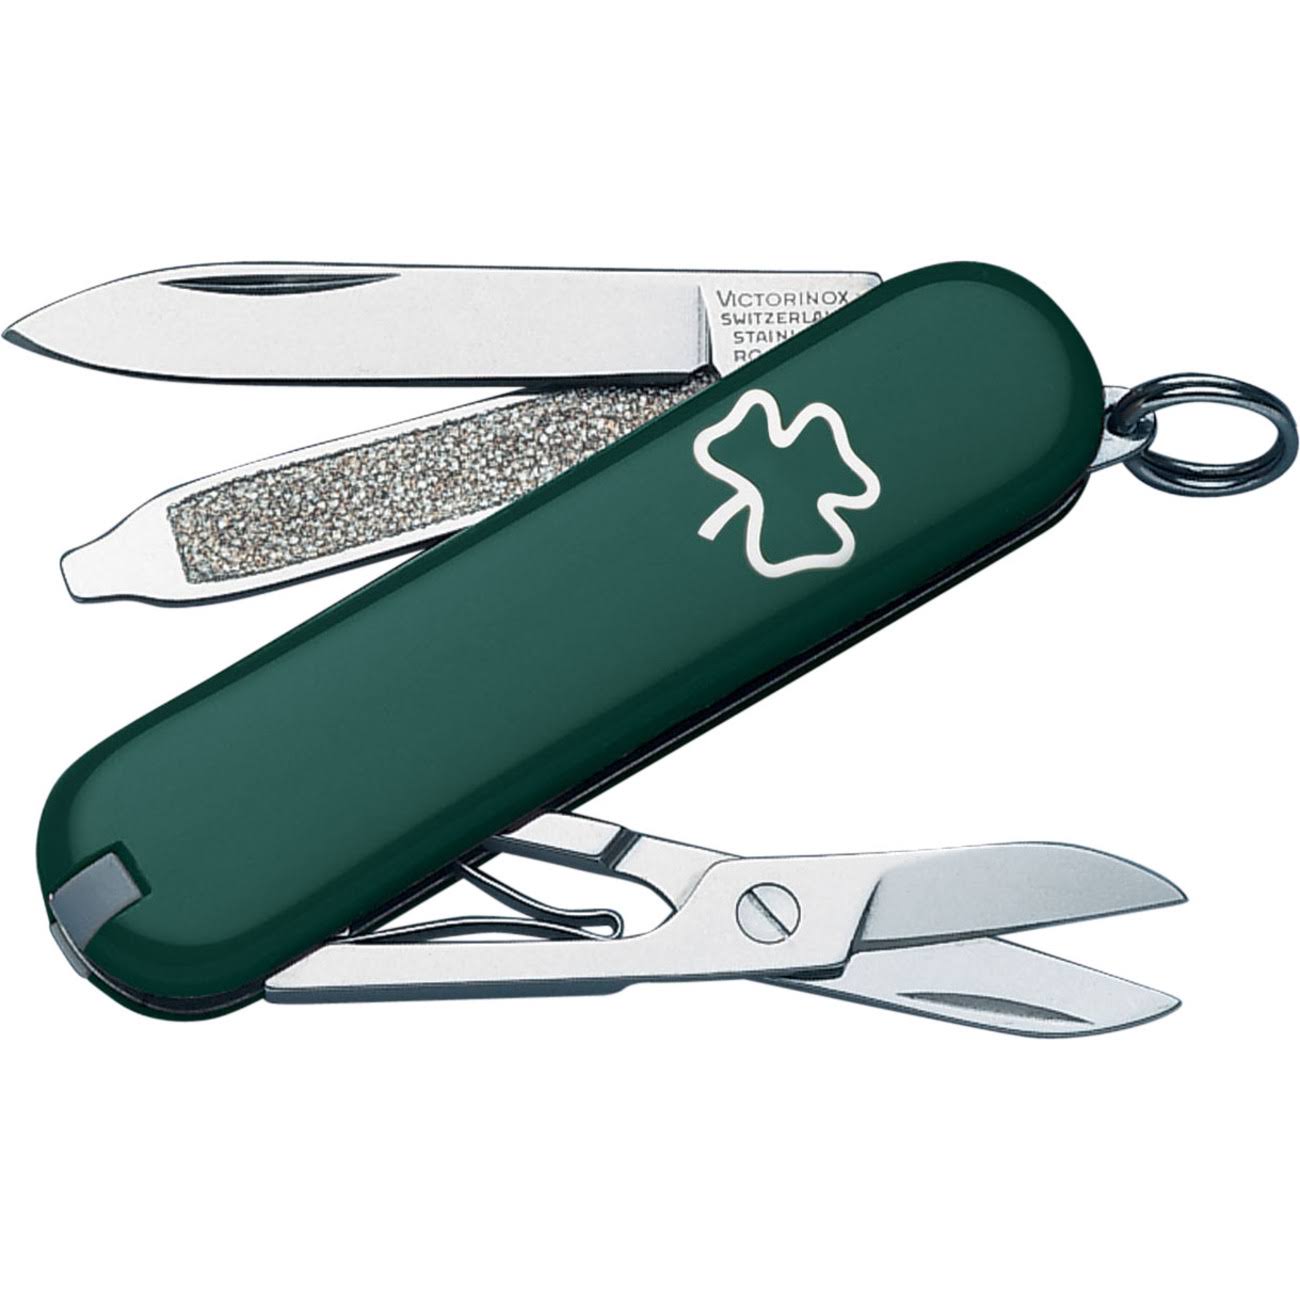 Victorinox Swiss Army Classic SD Pocket Knife - Shamrock